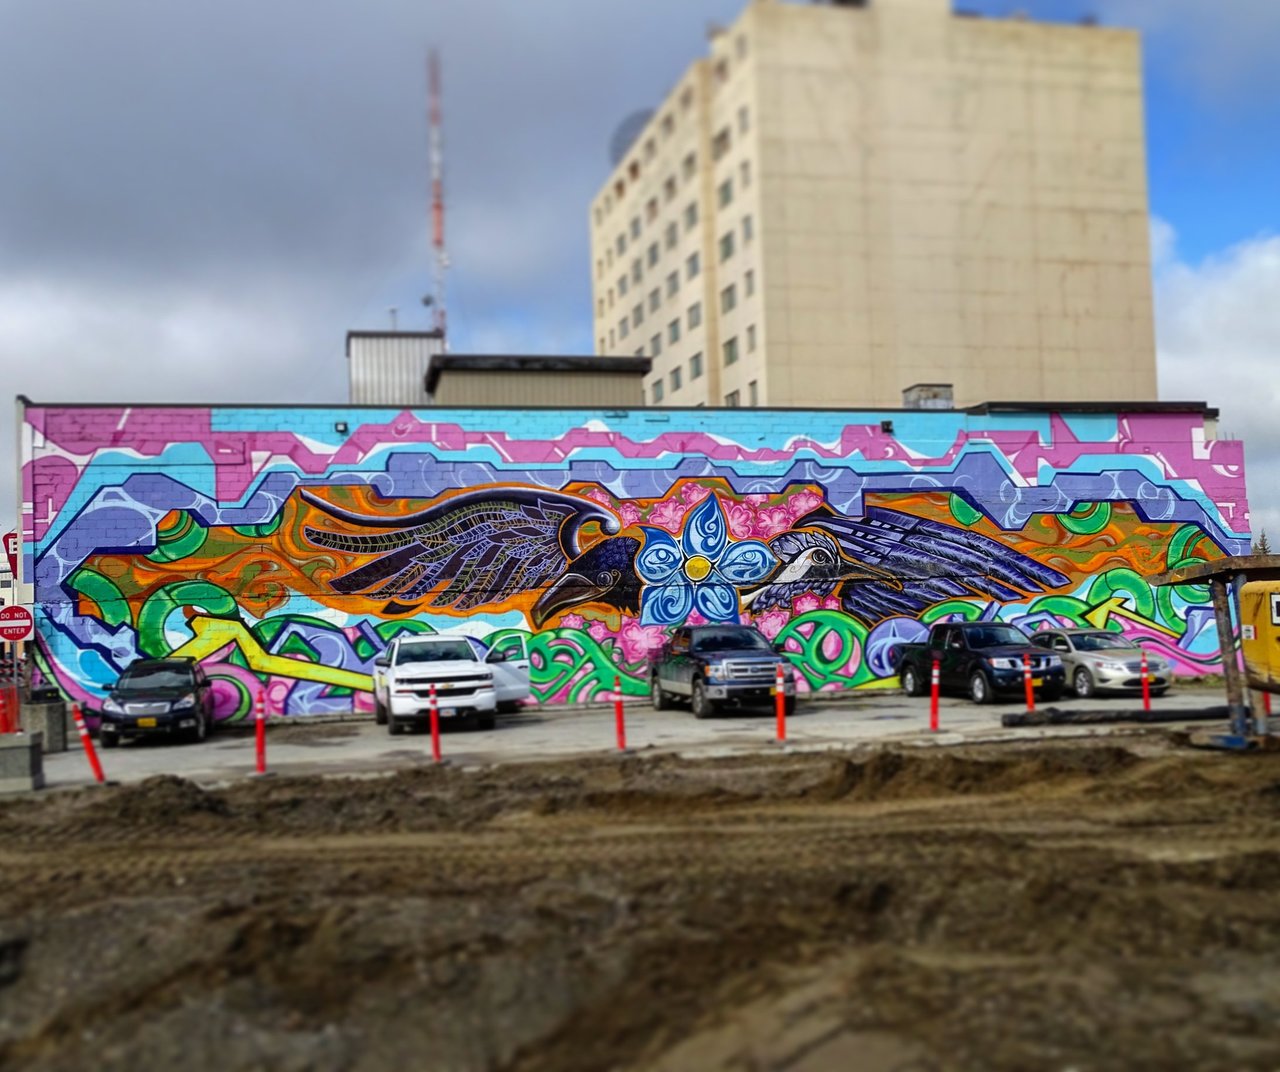 Fairbanks#art #streetart #mural #painting #graffiti #colorful #alaska https://t.co/E8rSMHIzN9